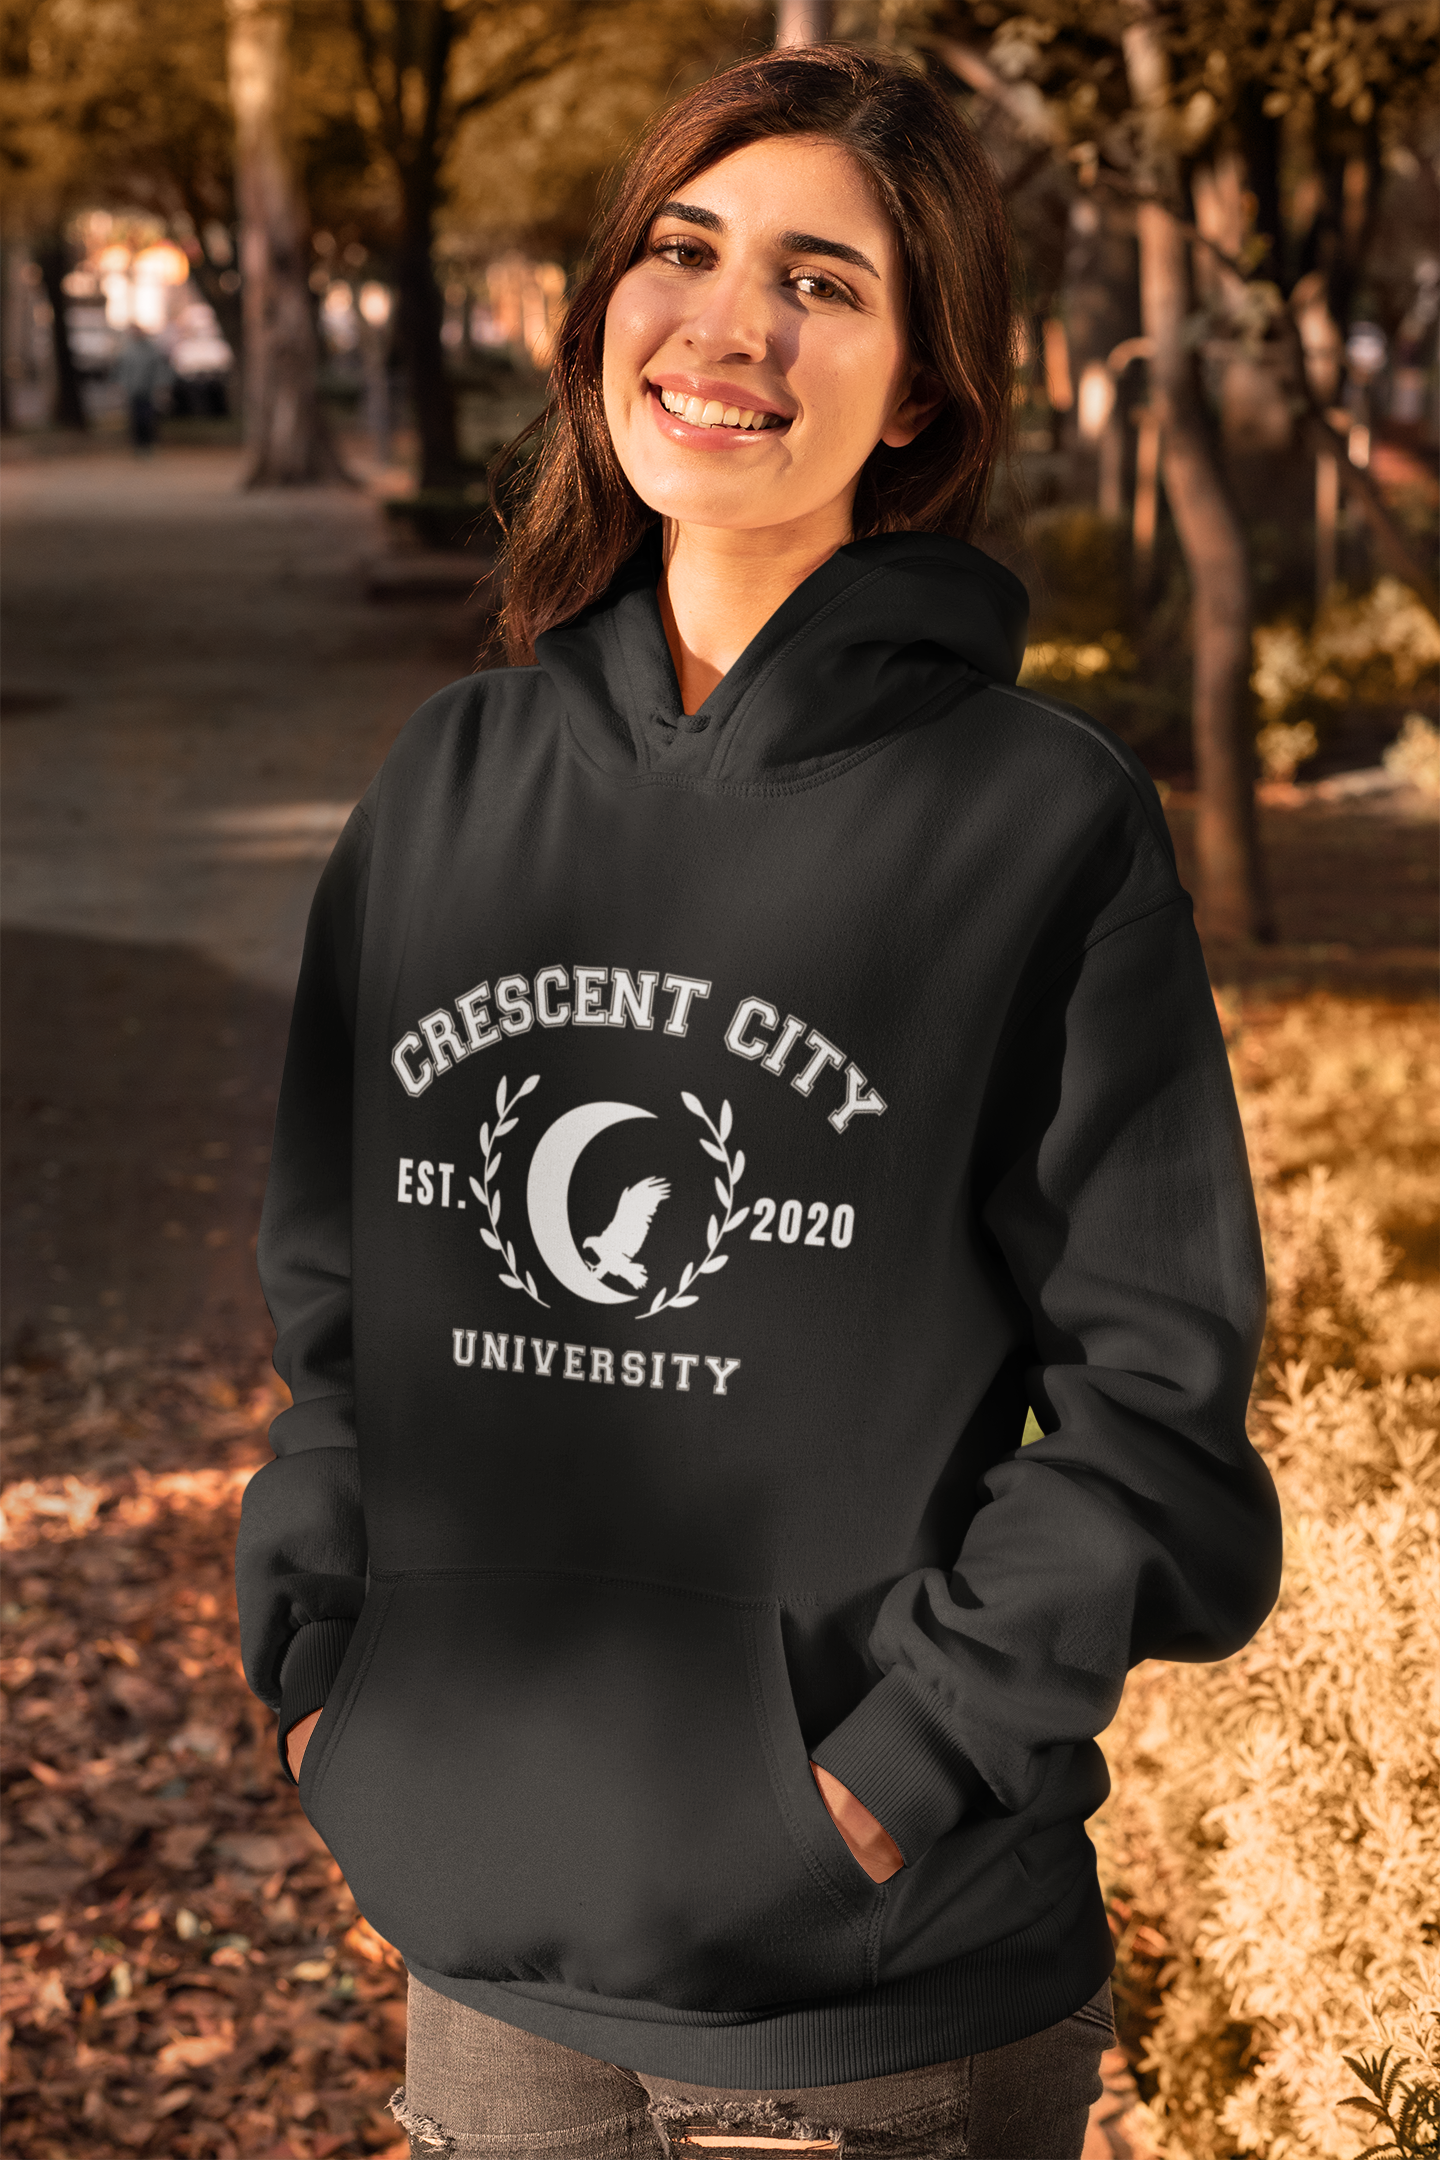 Crescent City University Hooded Sweatshirt